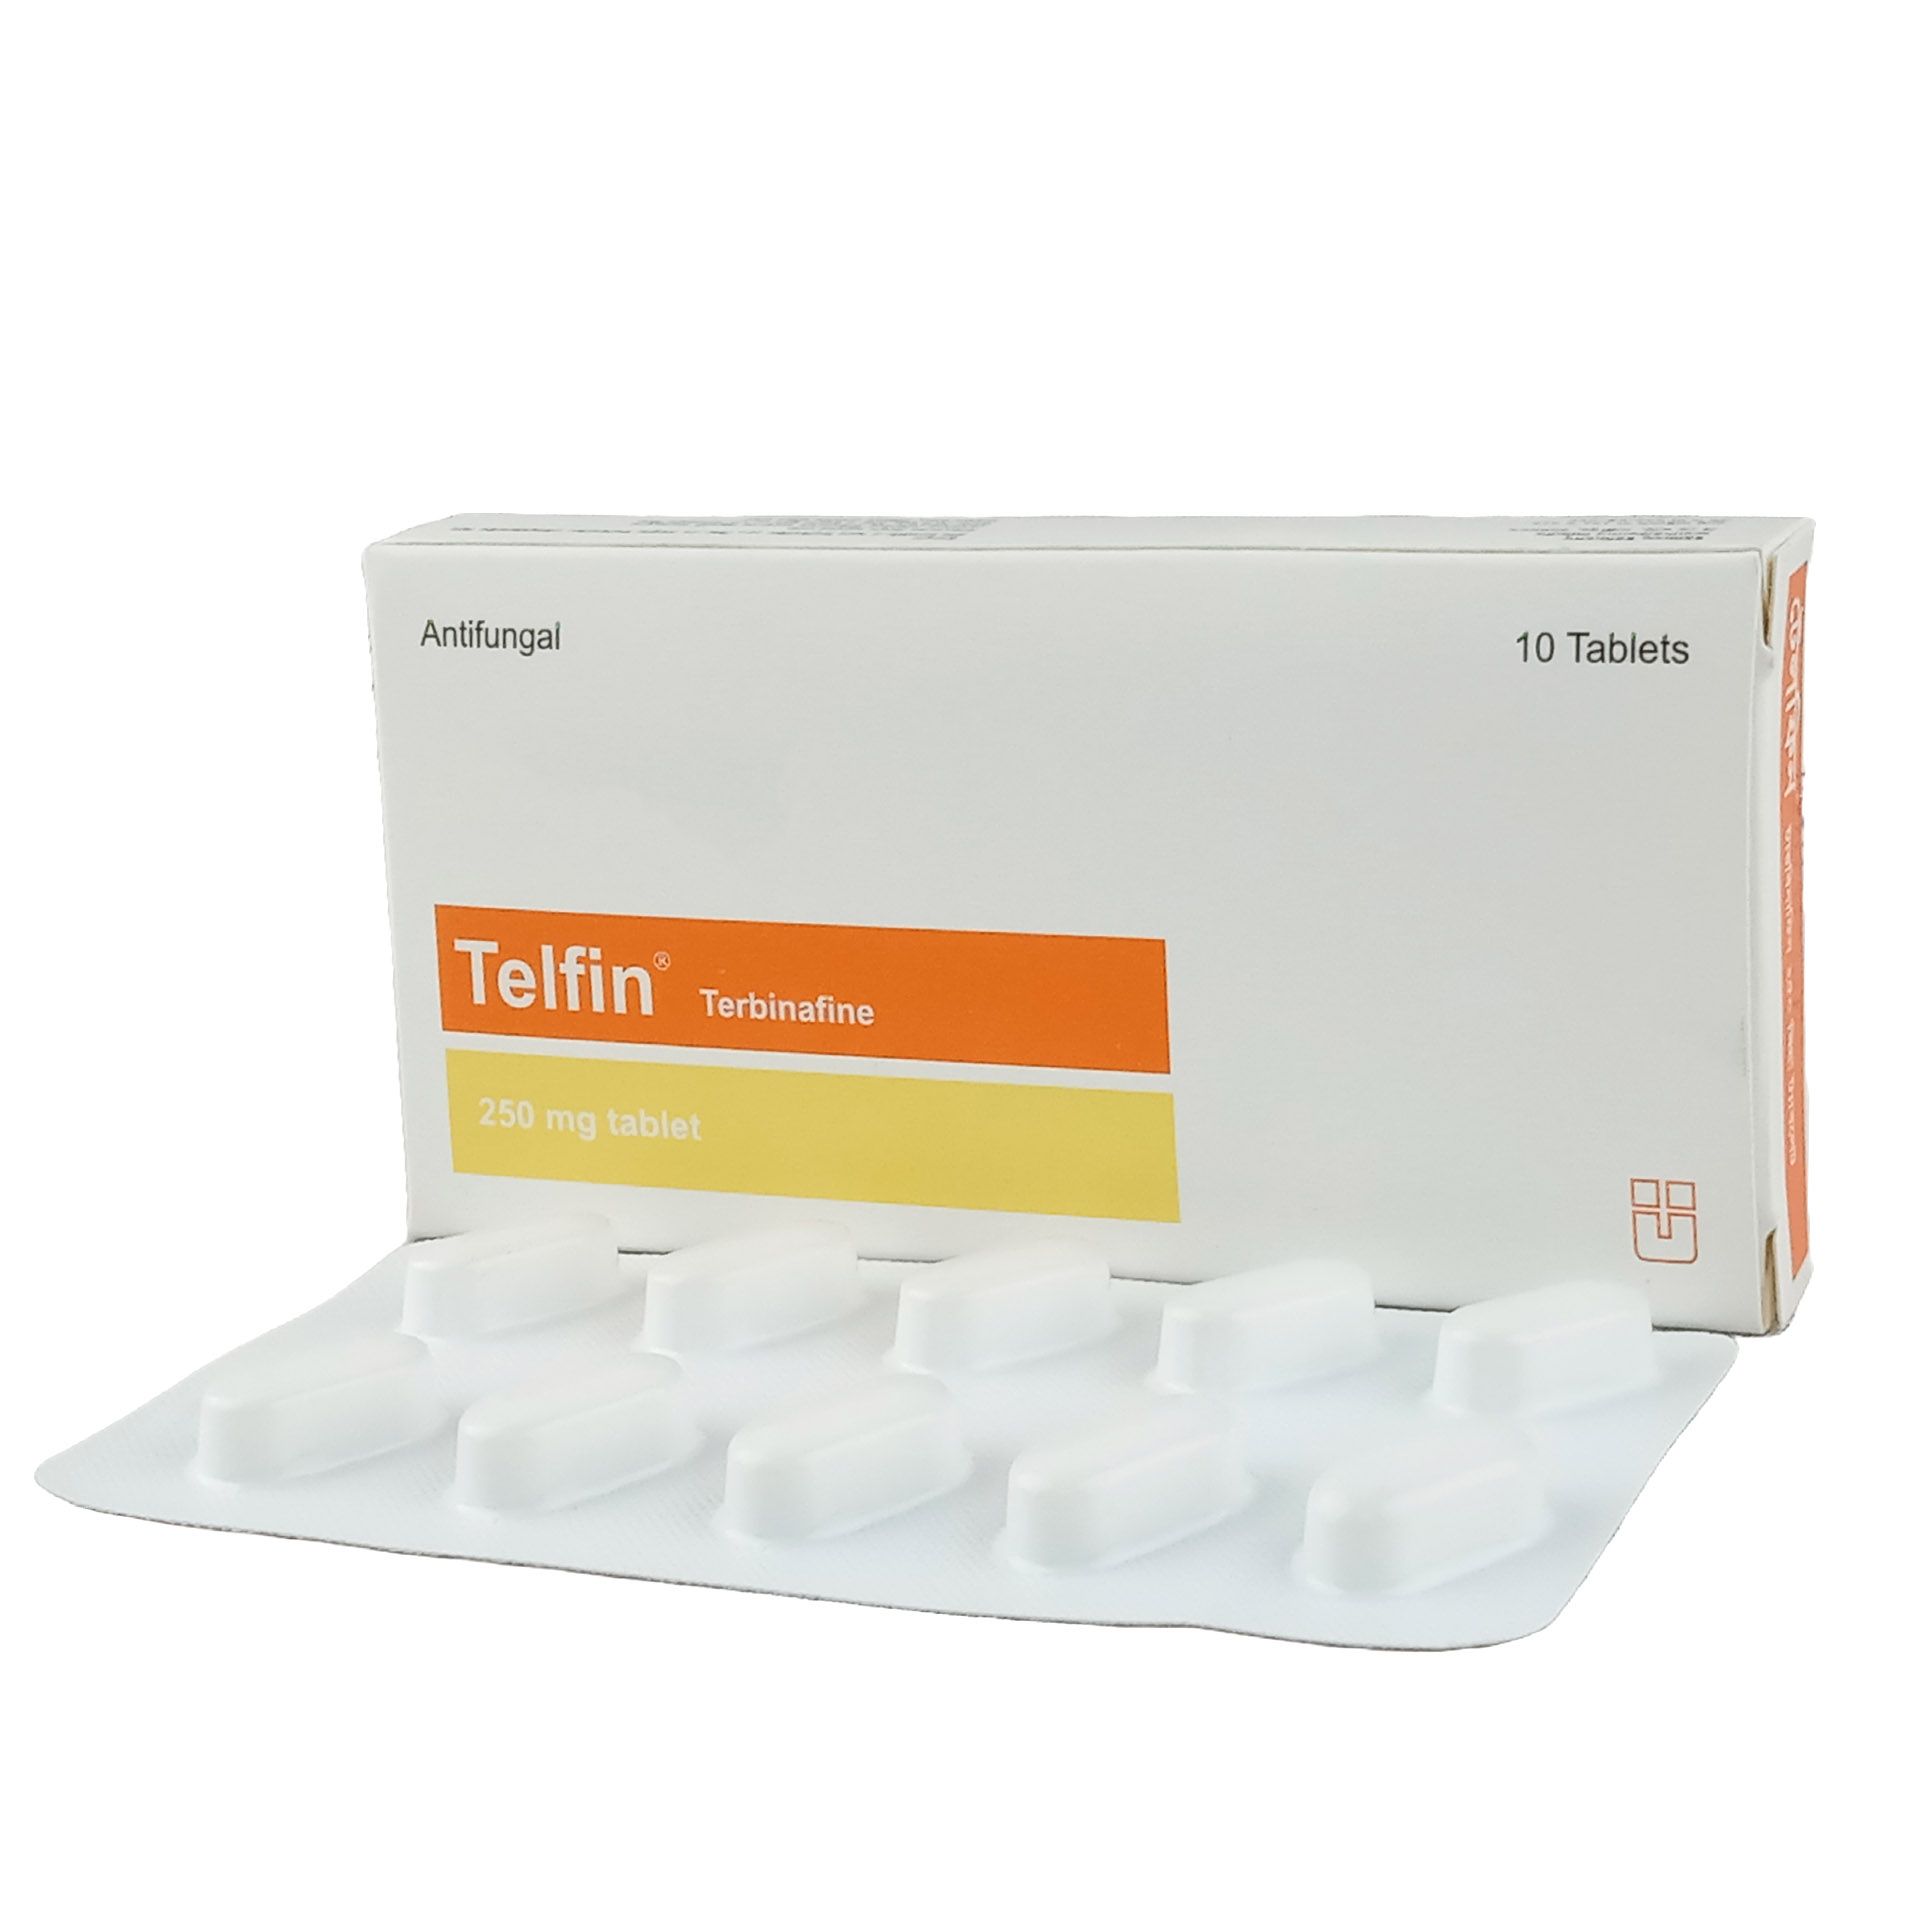 Telfin 250mg Tablet